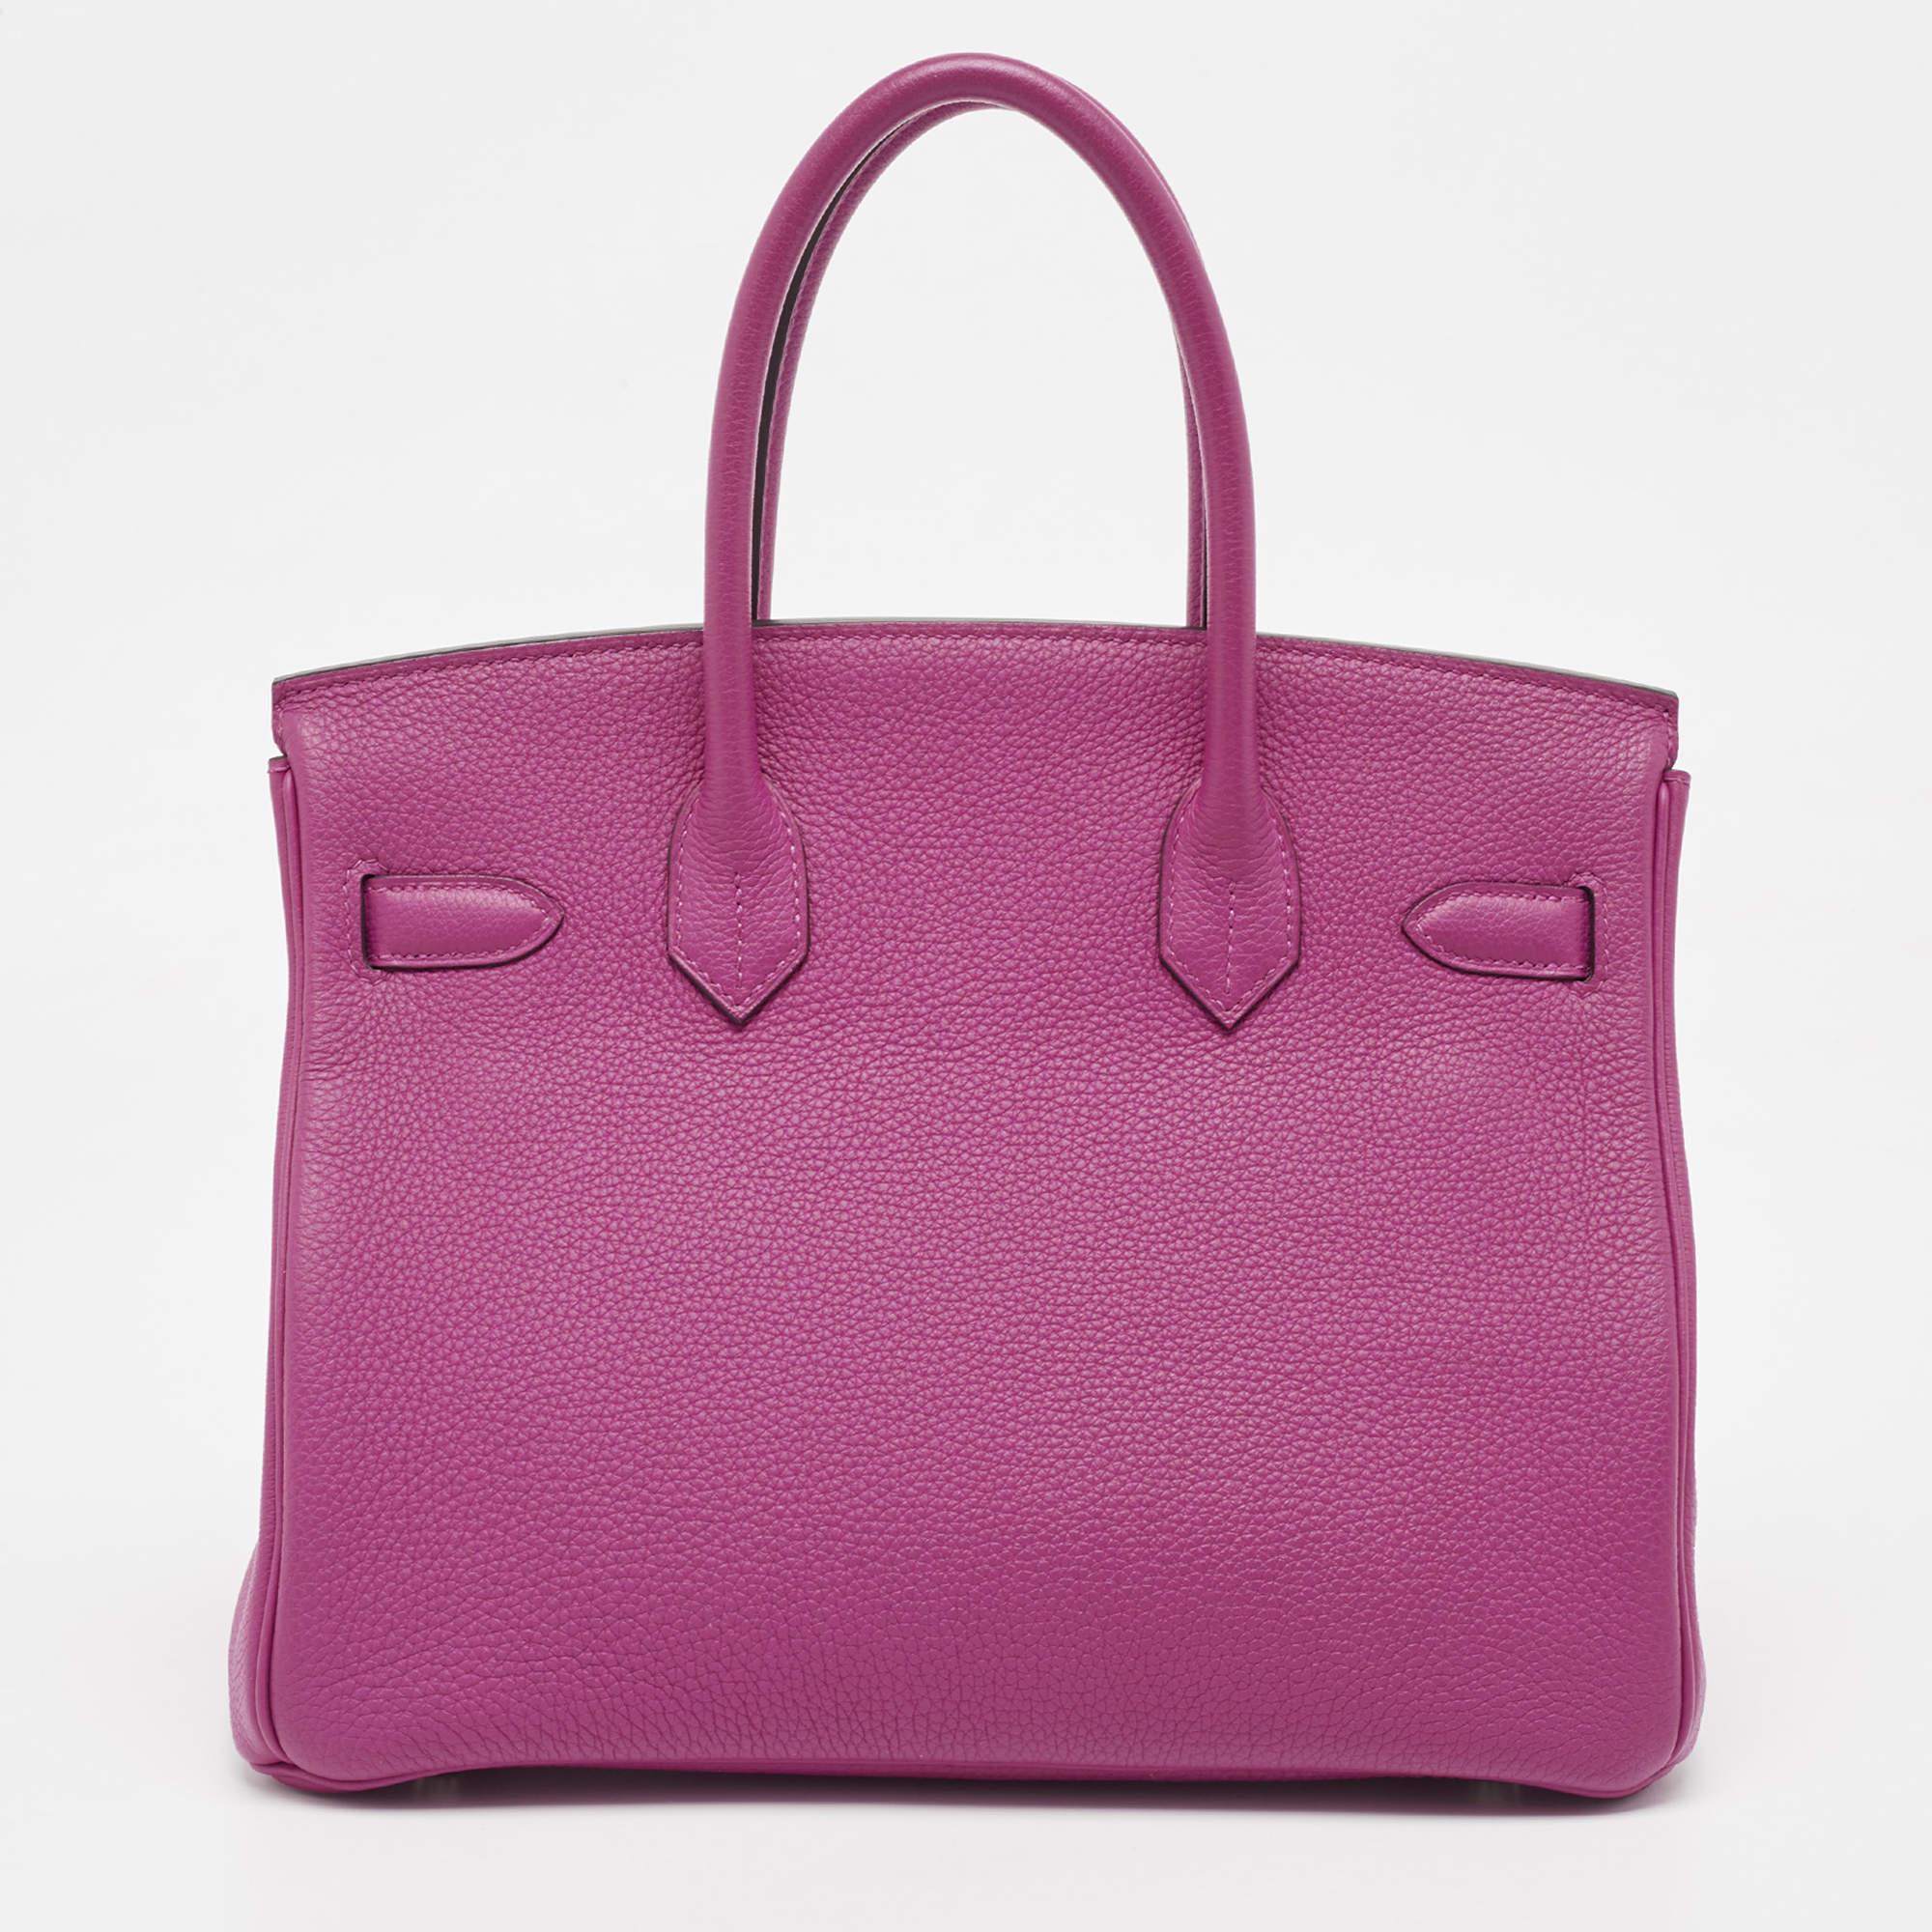 Hermès Rose Pourpre Togo Leather Palladium Finish Birkin 30 Bag 5